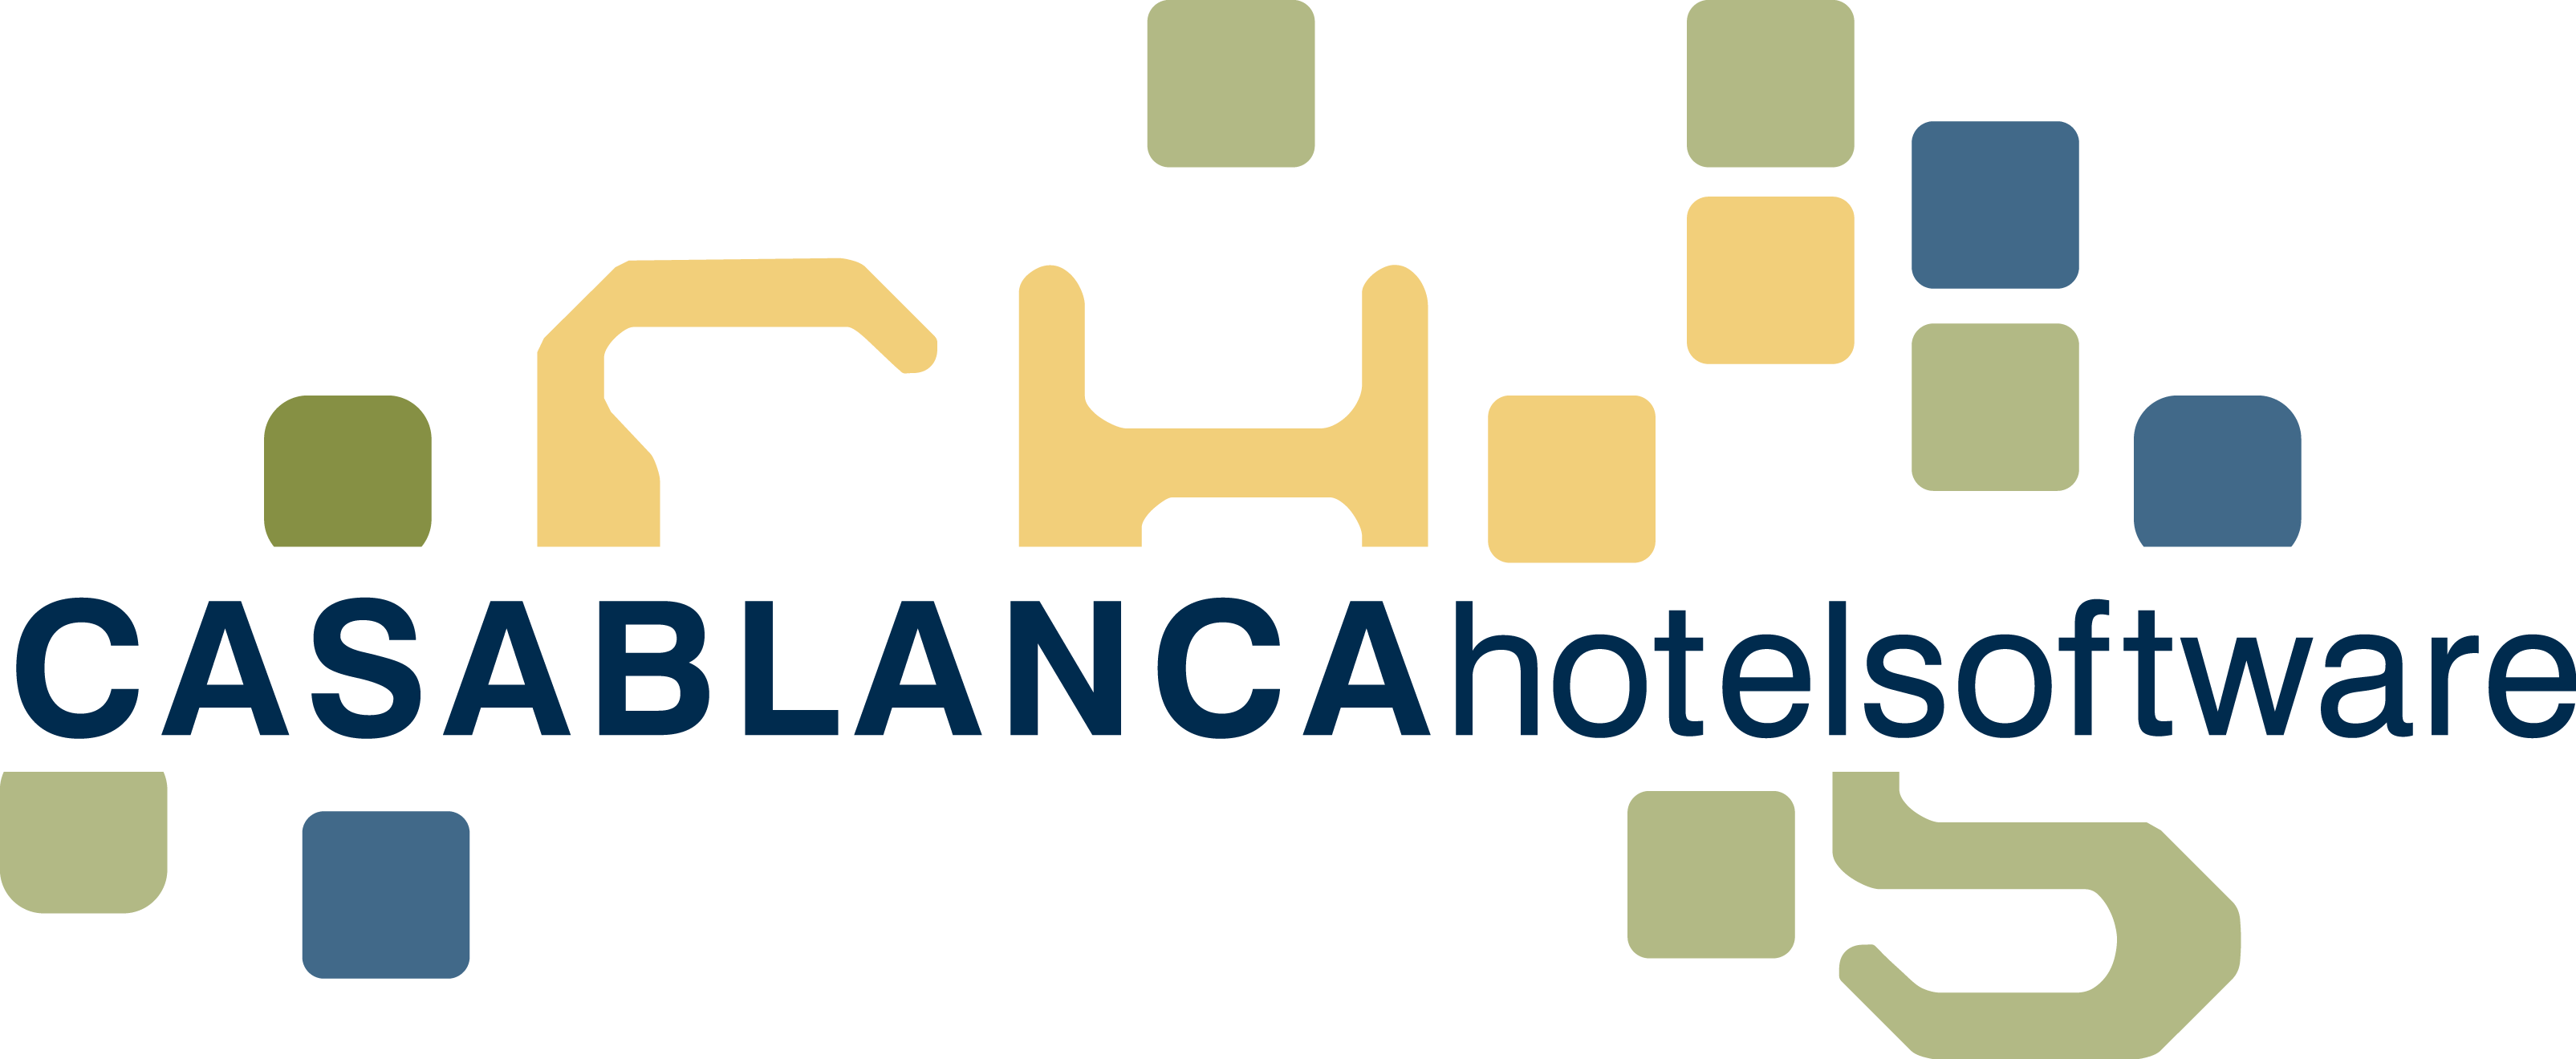 https://www.customer-alliance.com/wp-content/uploads/2021/03/casablanca_LOGO.png